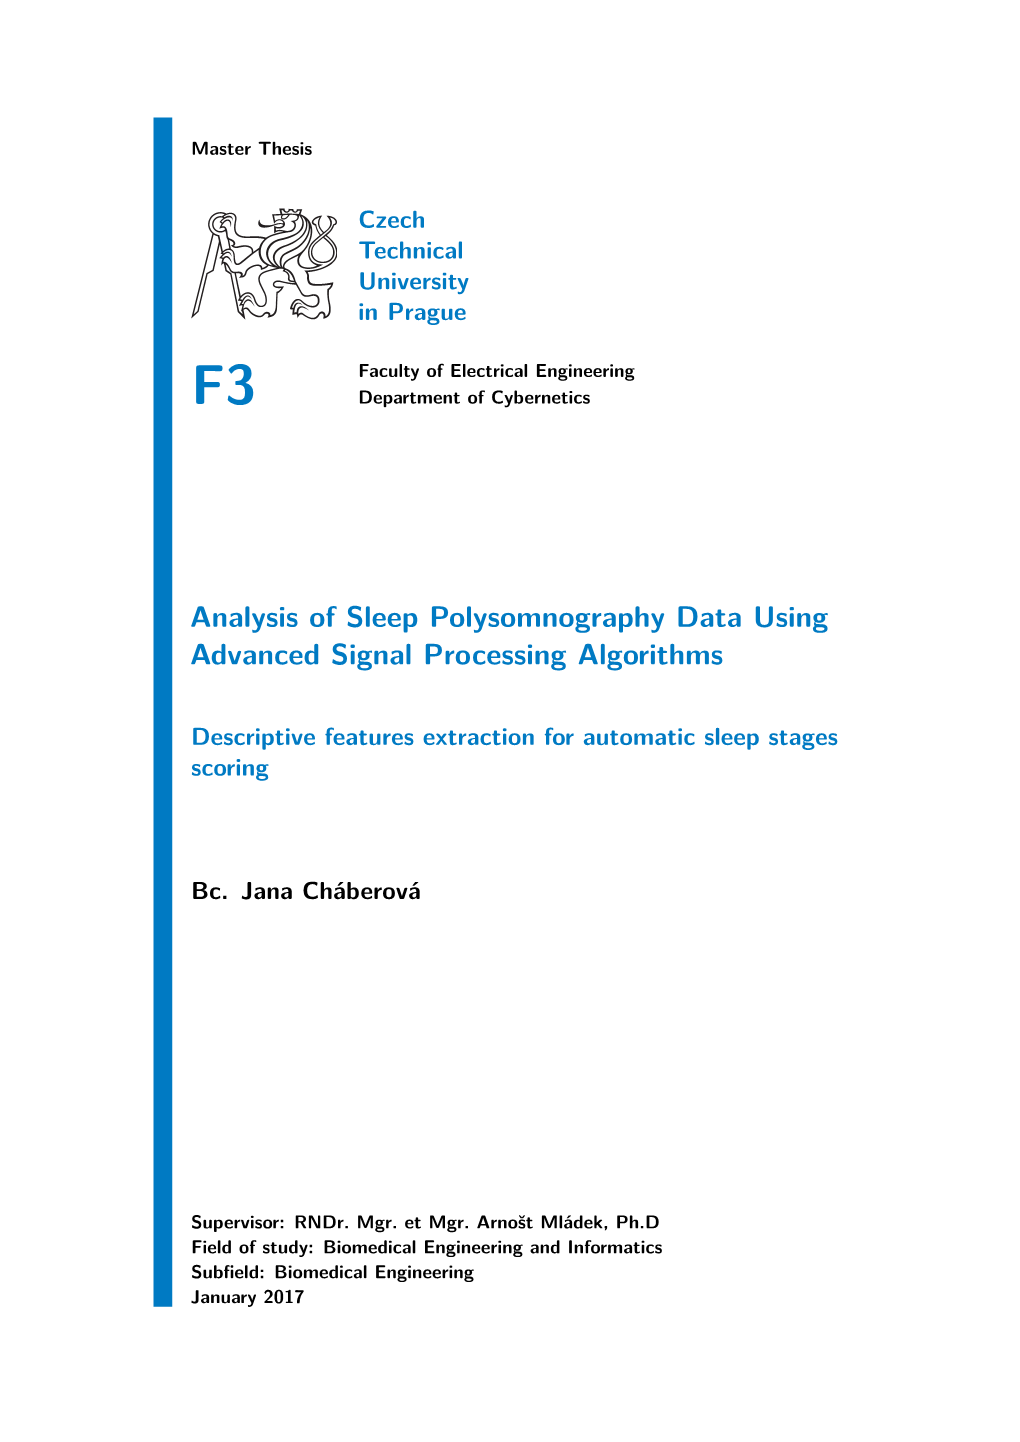 Analysis of Sleep Polysomnography Data Using Advanced Signal Processing Algorithms